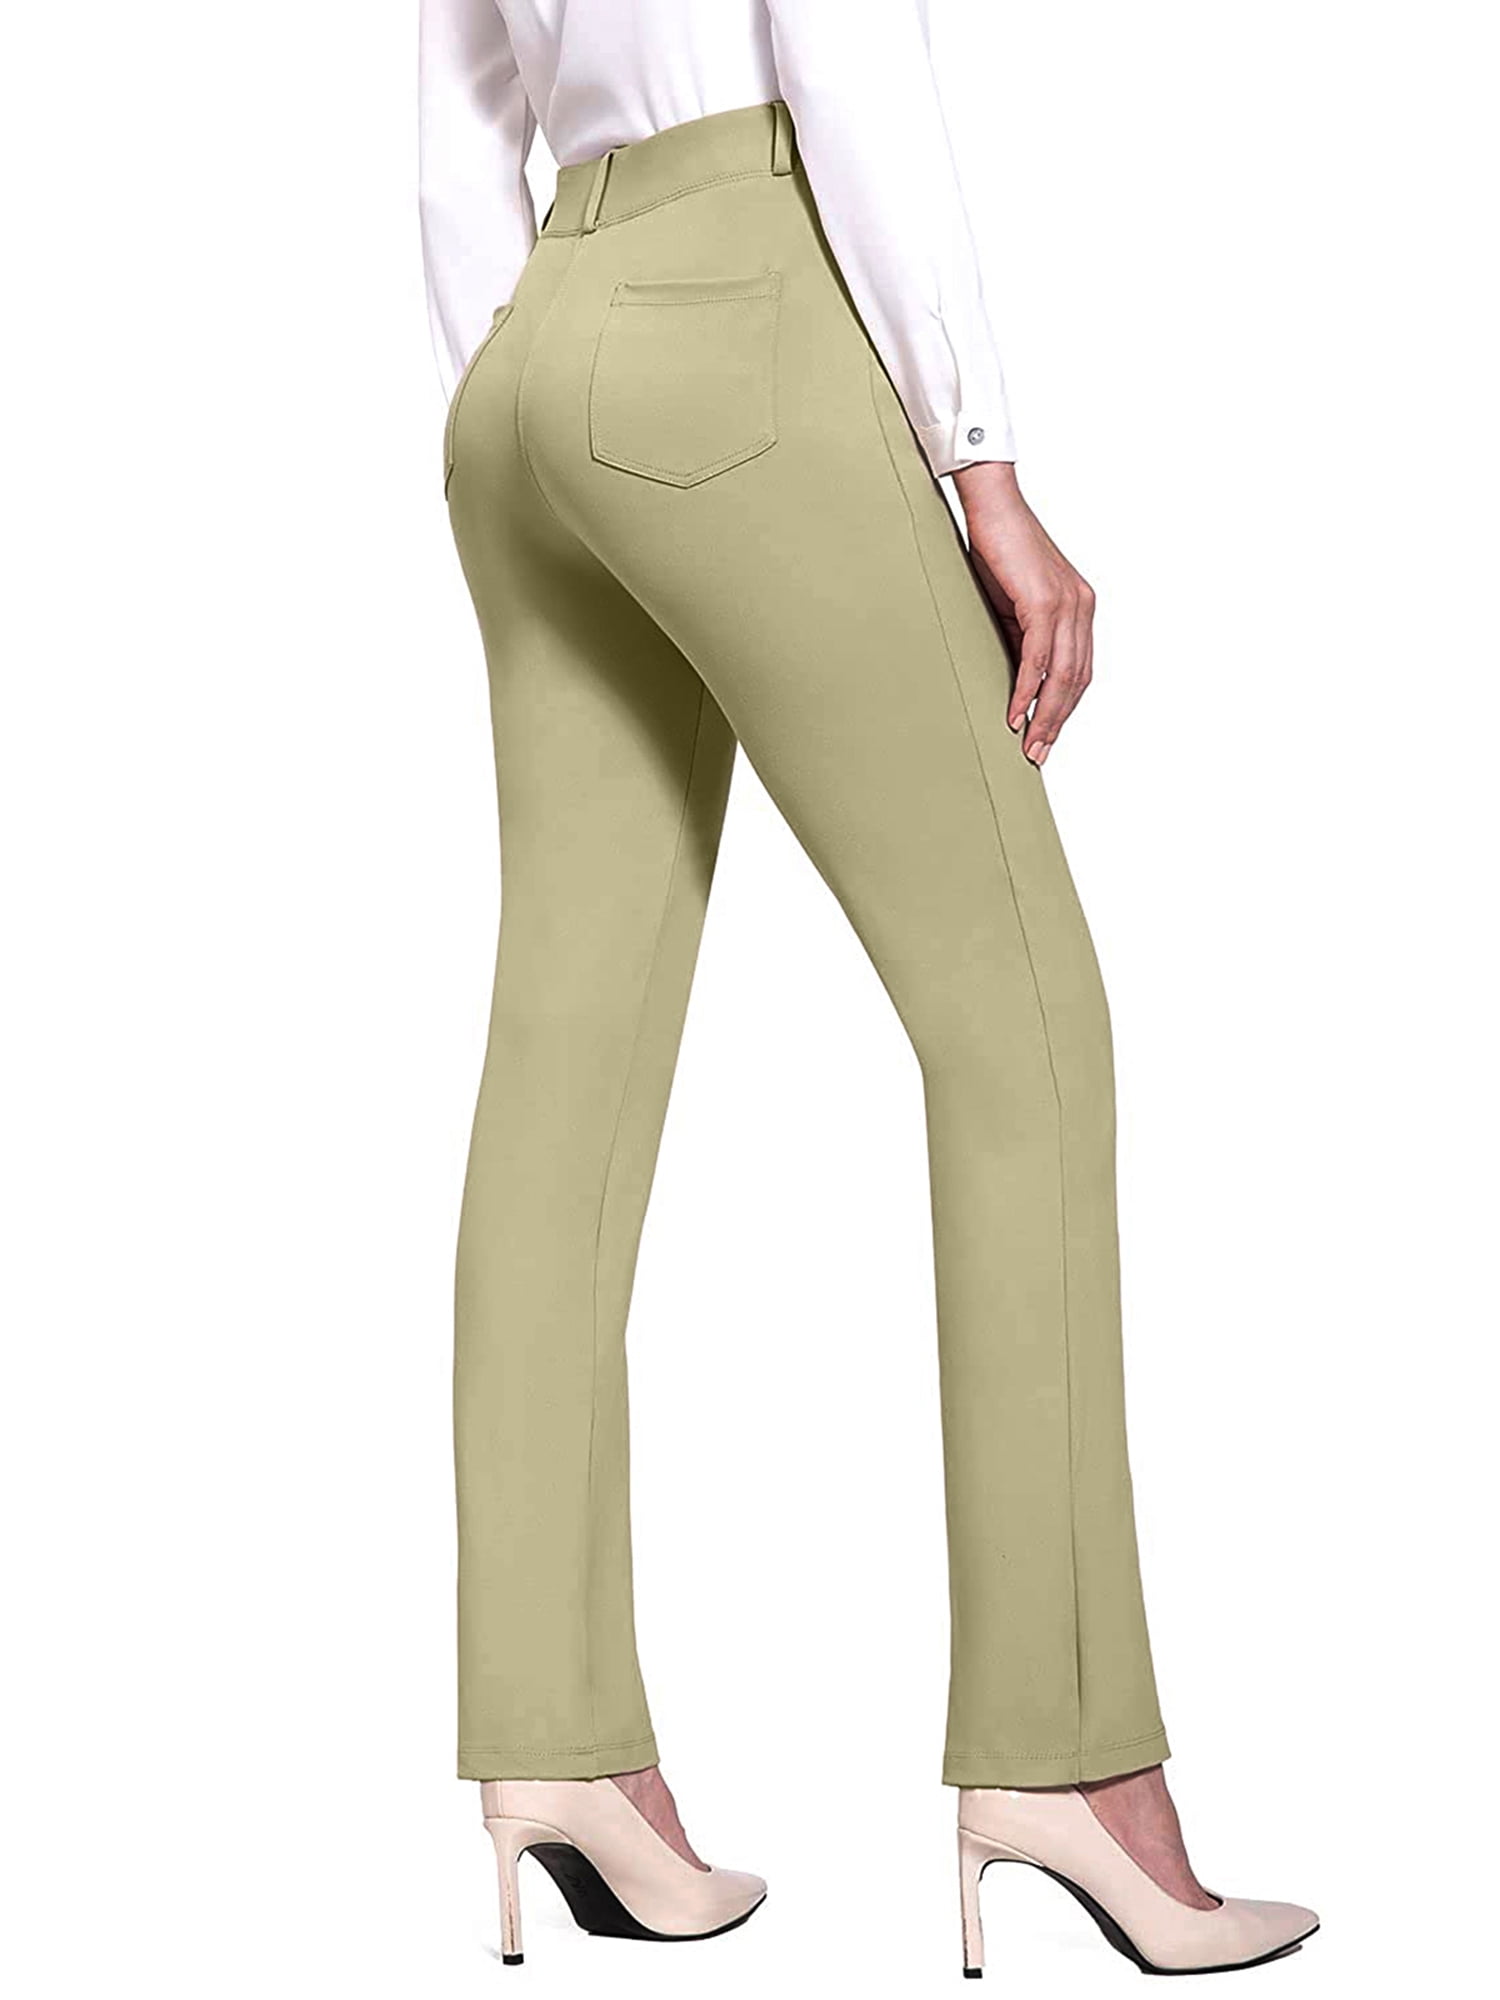 Women s Capri Dress Pants Yoga Pants with Mid Waist Slacks Stretchy Cuff Pants  Business Casual, Beyondshoping